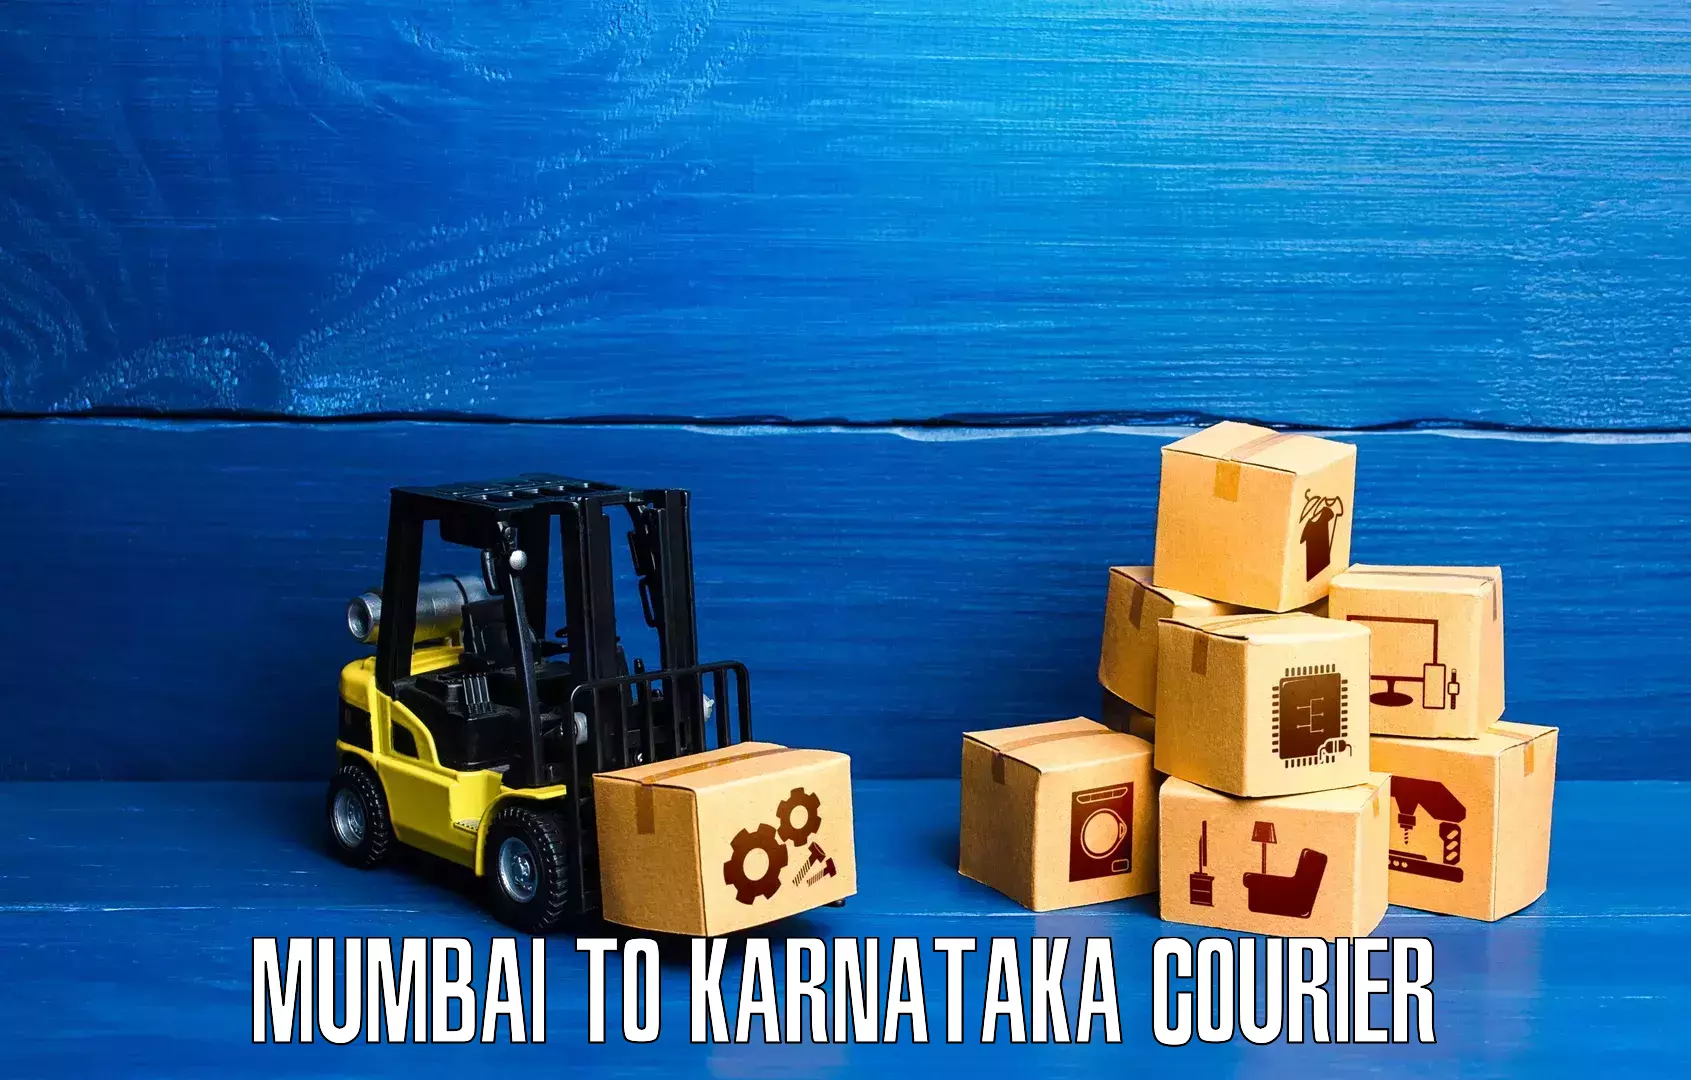 Reliable delivery network Mumbai to Karnataka